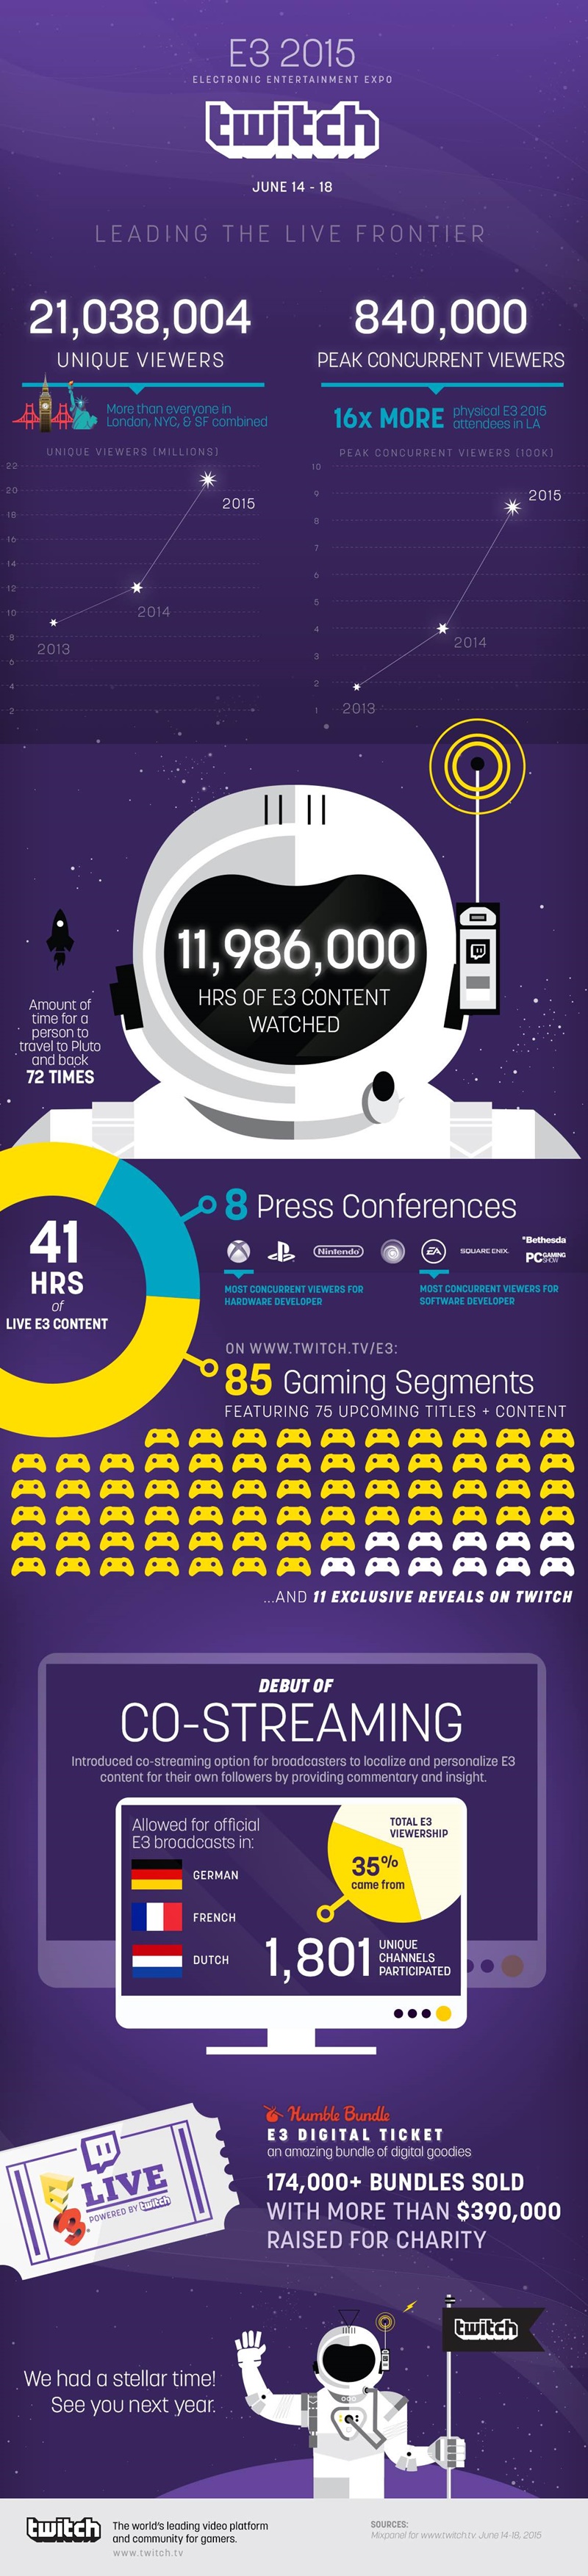 twitch-e3-infographic.jpg